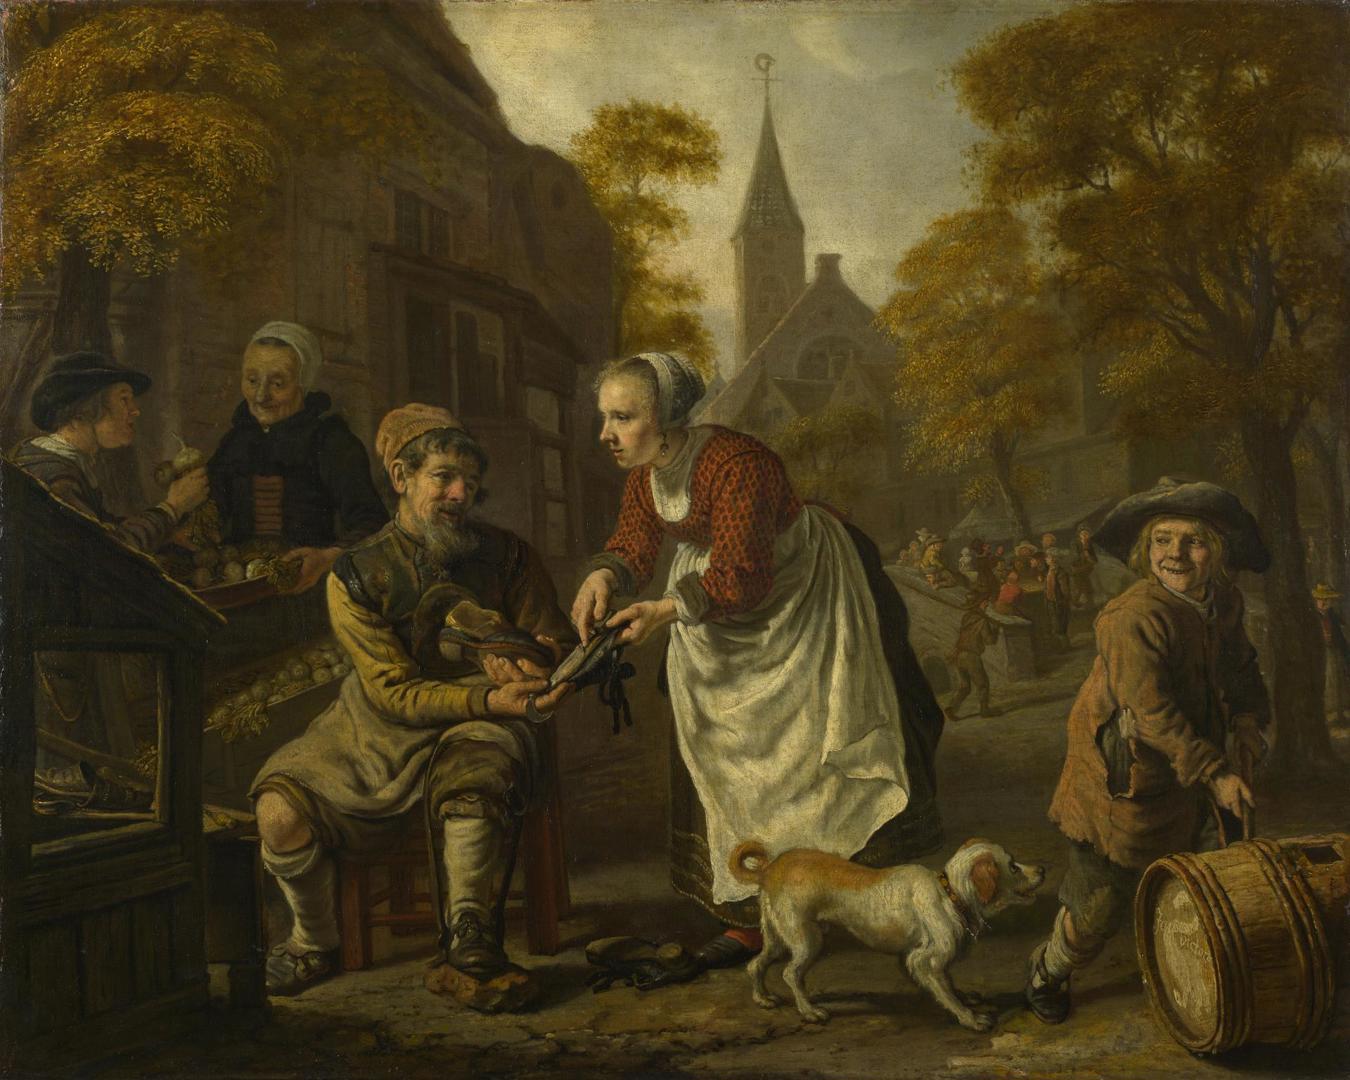 A Village Scene with a Cobbler by Jan Victors